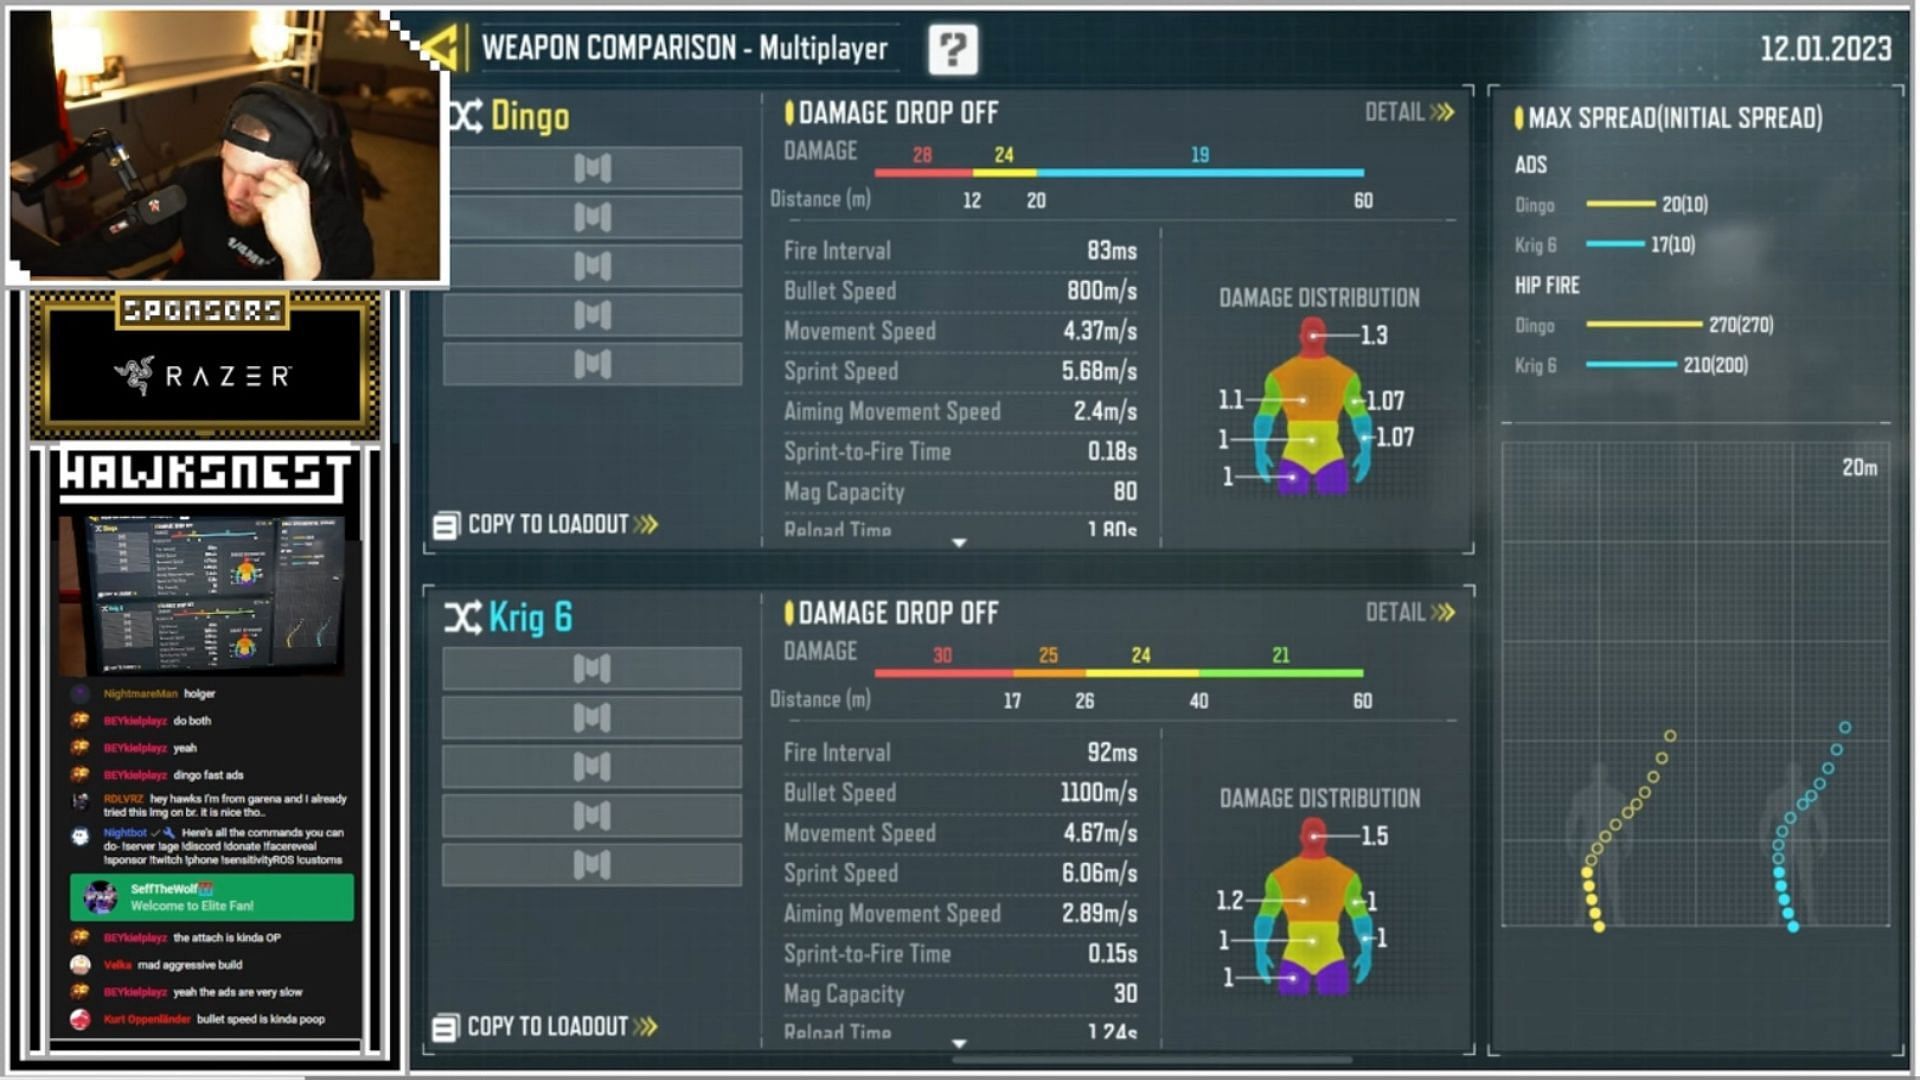 Weapon comparison between Dingo and Krig 6 (Image via YouTube/HawksNest)